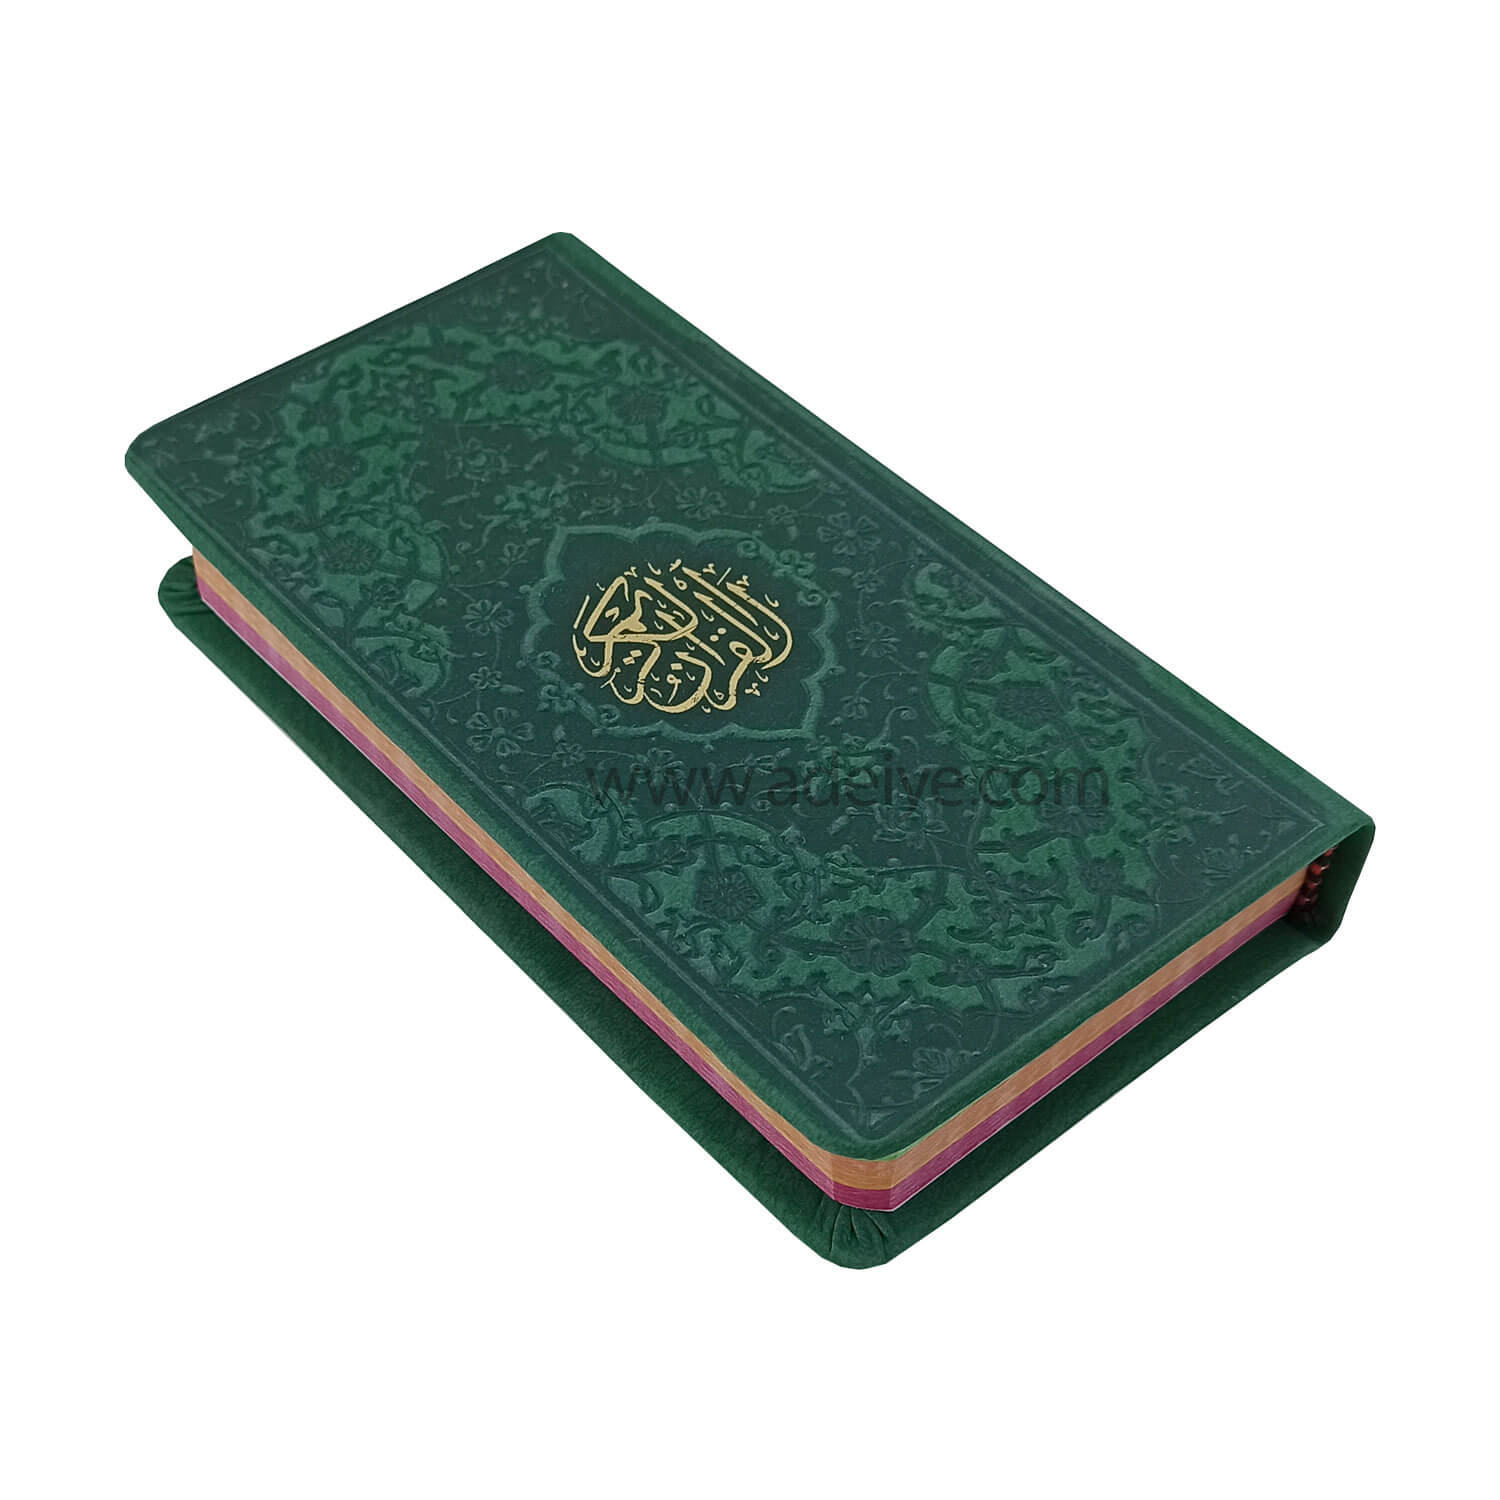 تصویر  مجموعه چهار جلدی پالتویی ترمو رنگی، شامل قرآن کریم، منتخب مفاتیح الجنان، صحیفه سجادیه و نهج البلاغه -کپی